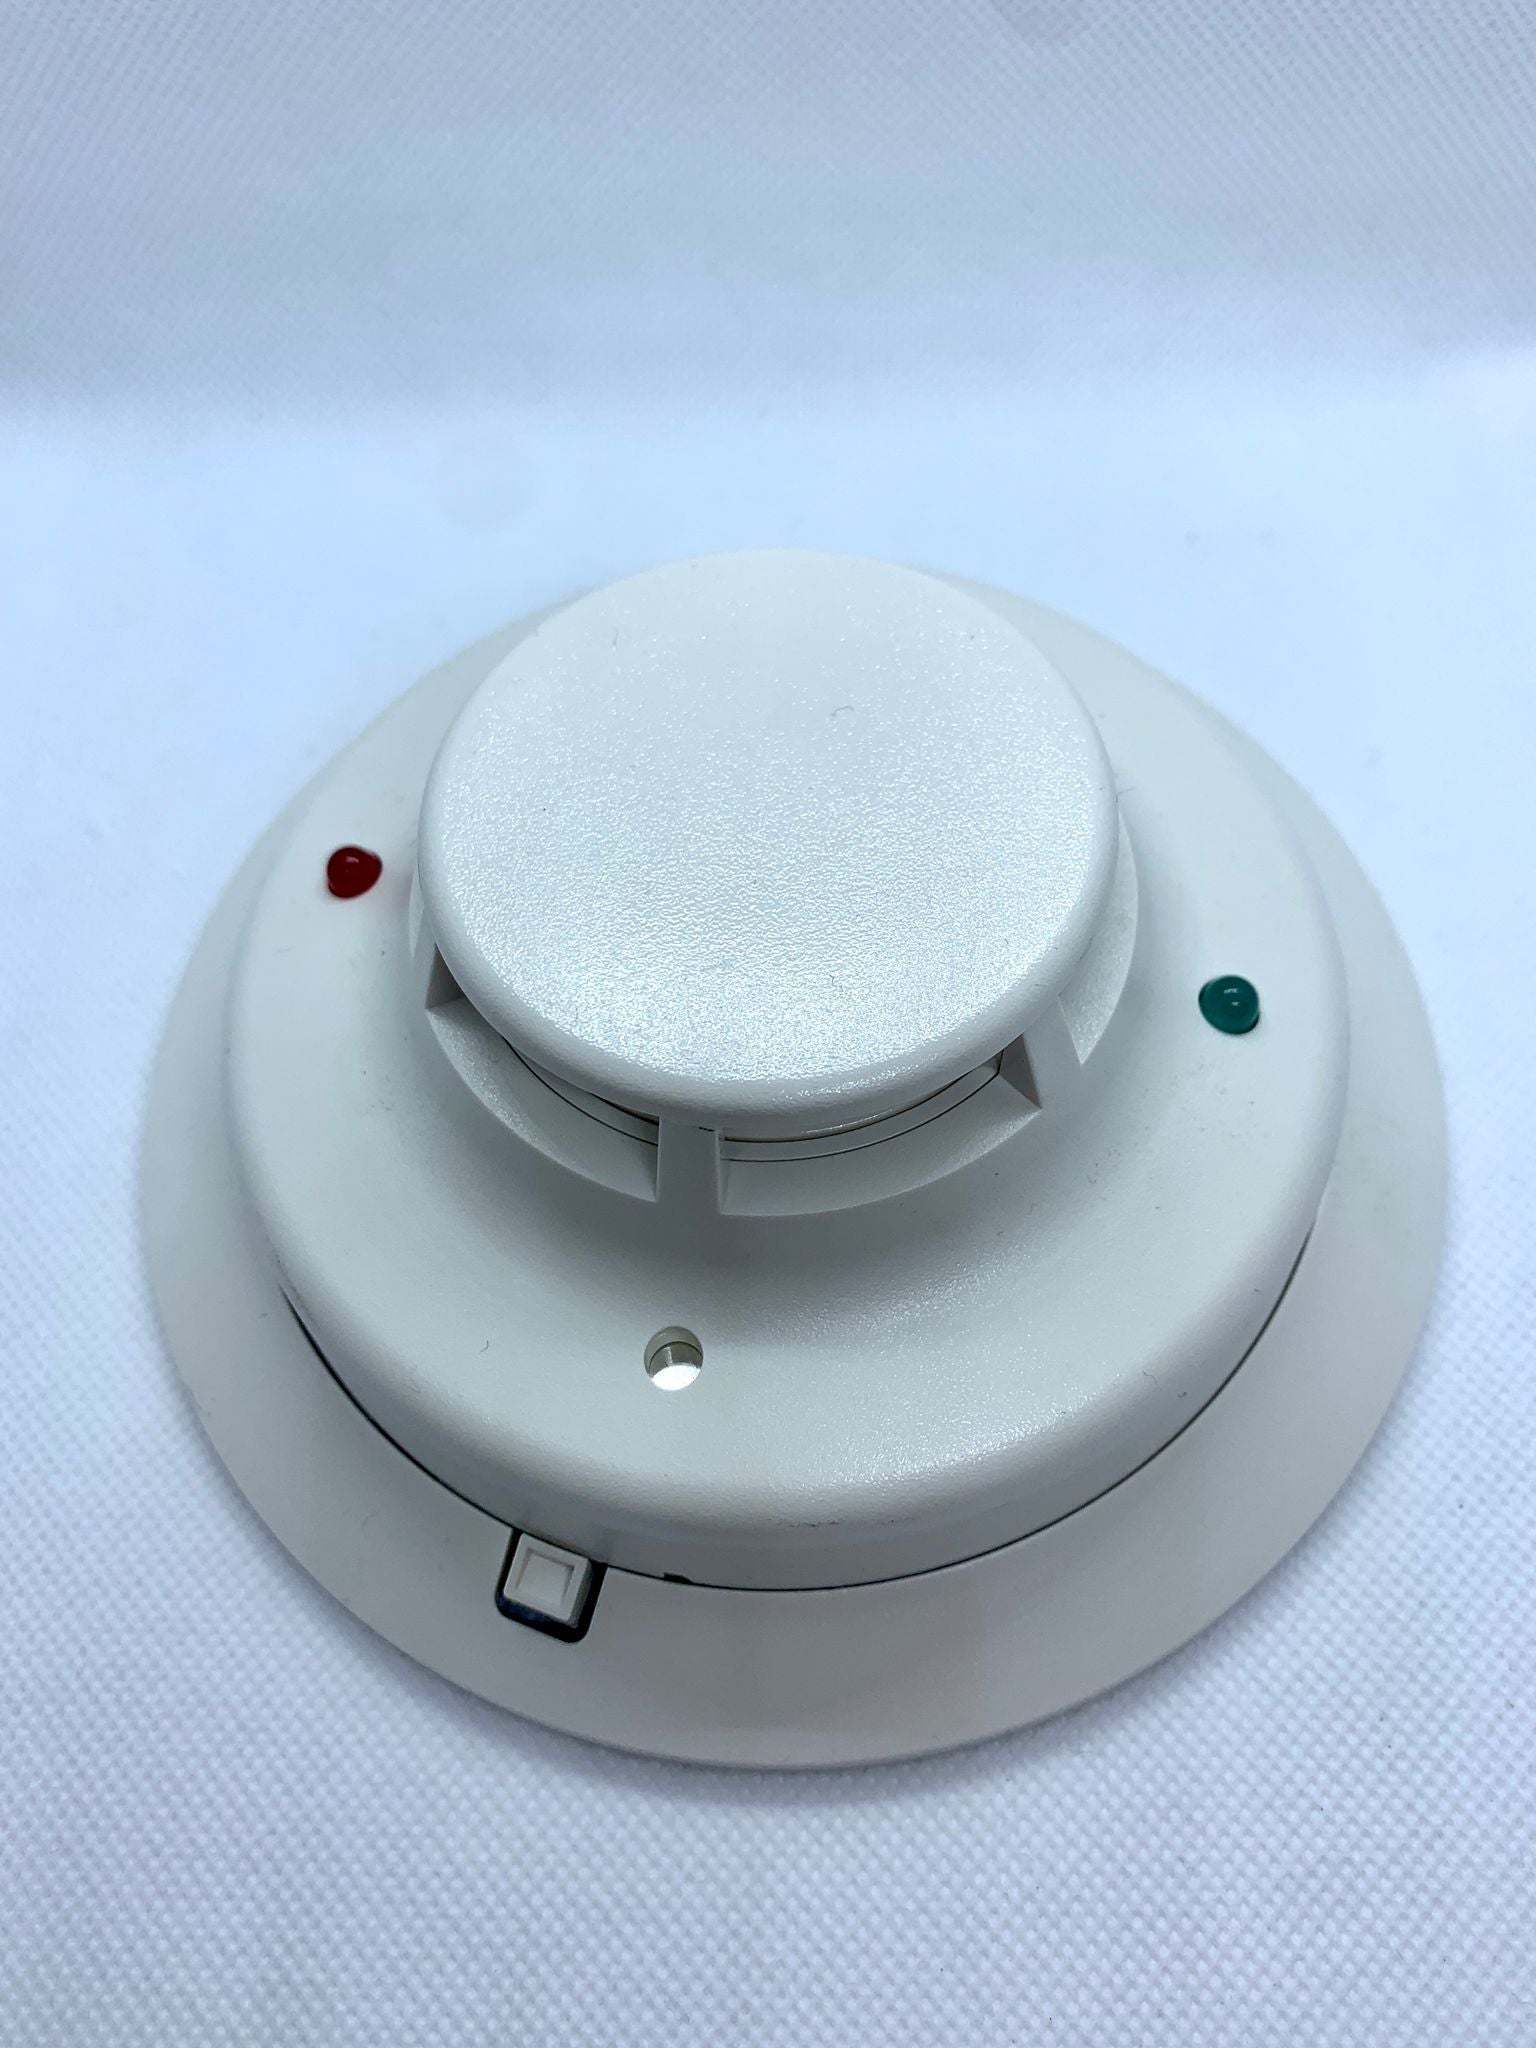 System Sensor 2W-B - The Fire Alarm Supplier